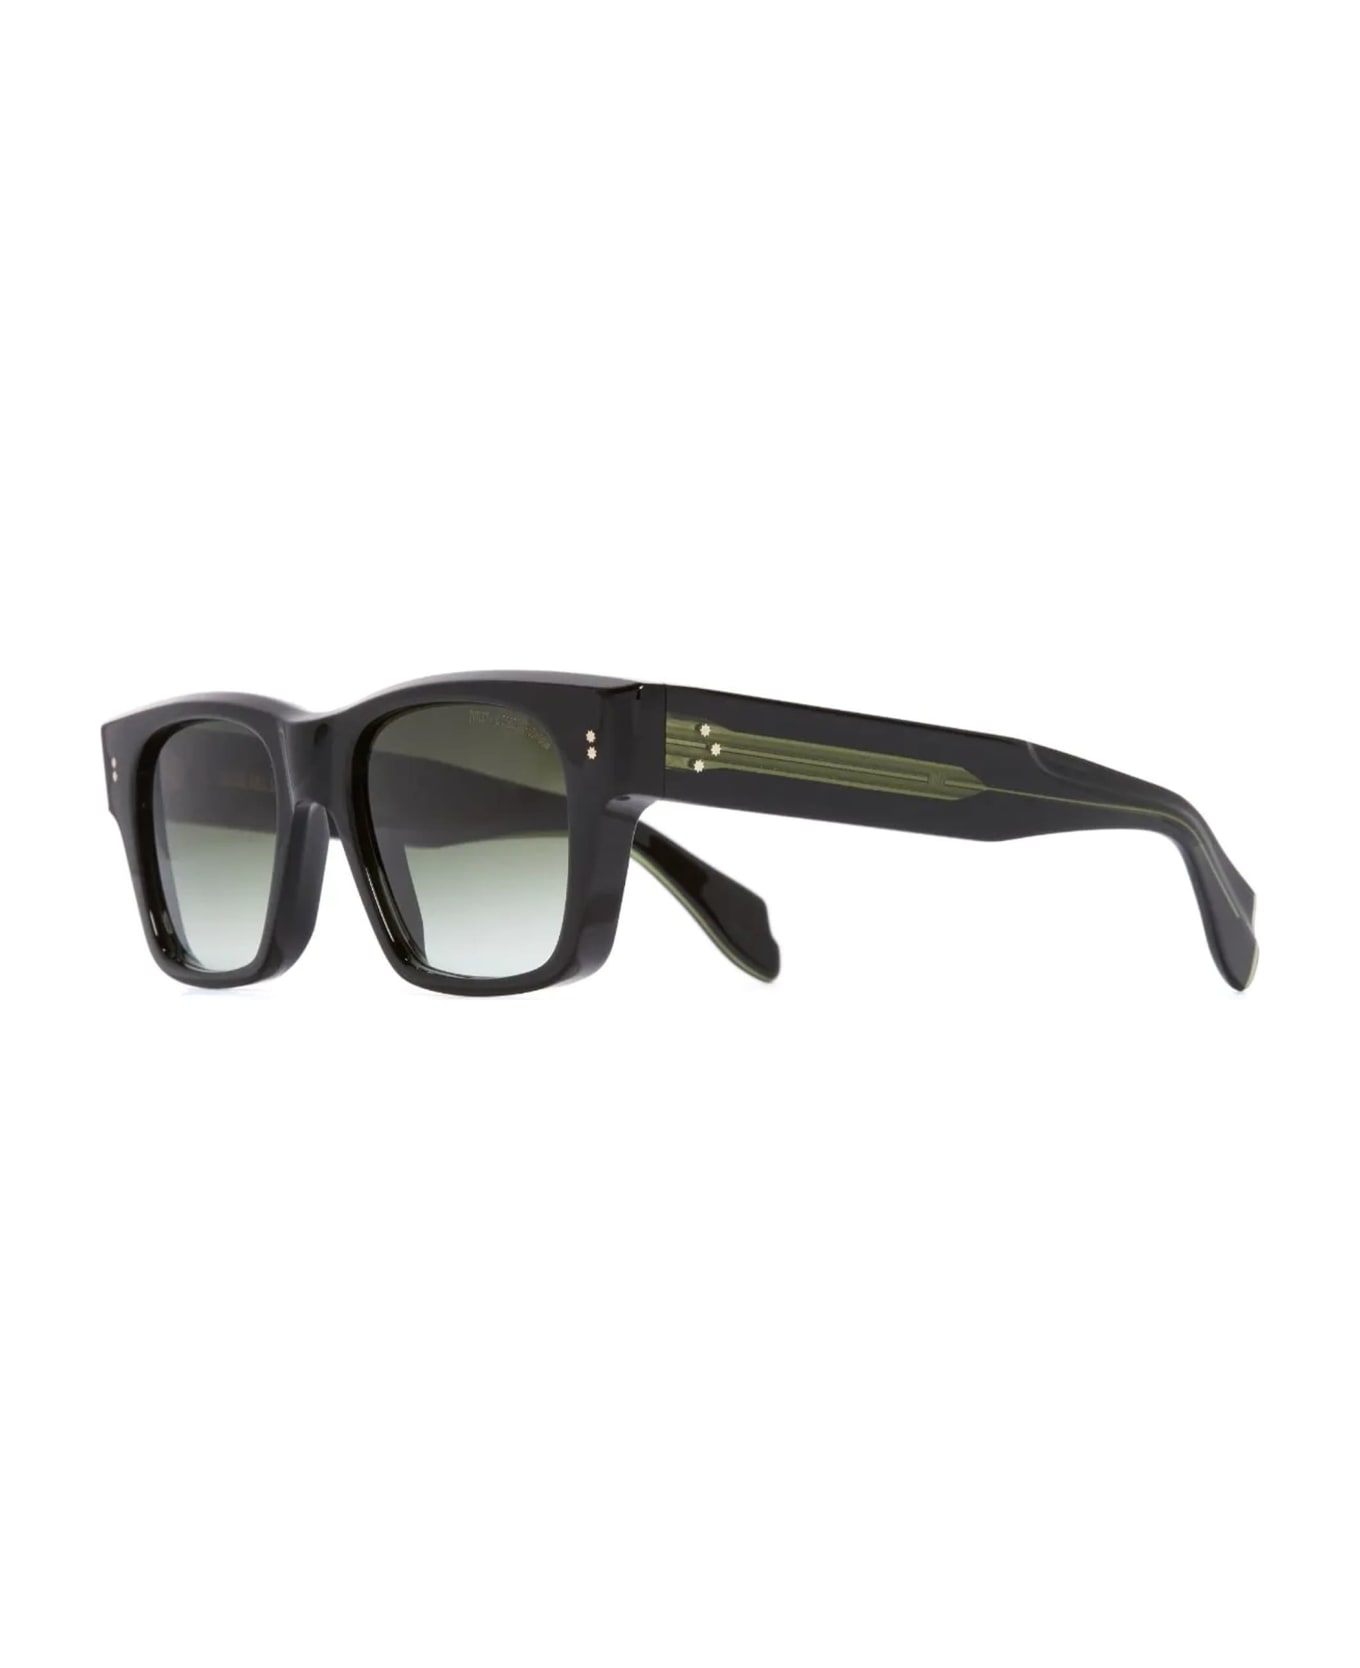 Cutler and Gross 9690 / Black Sunglasses - Black